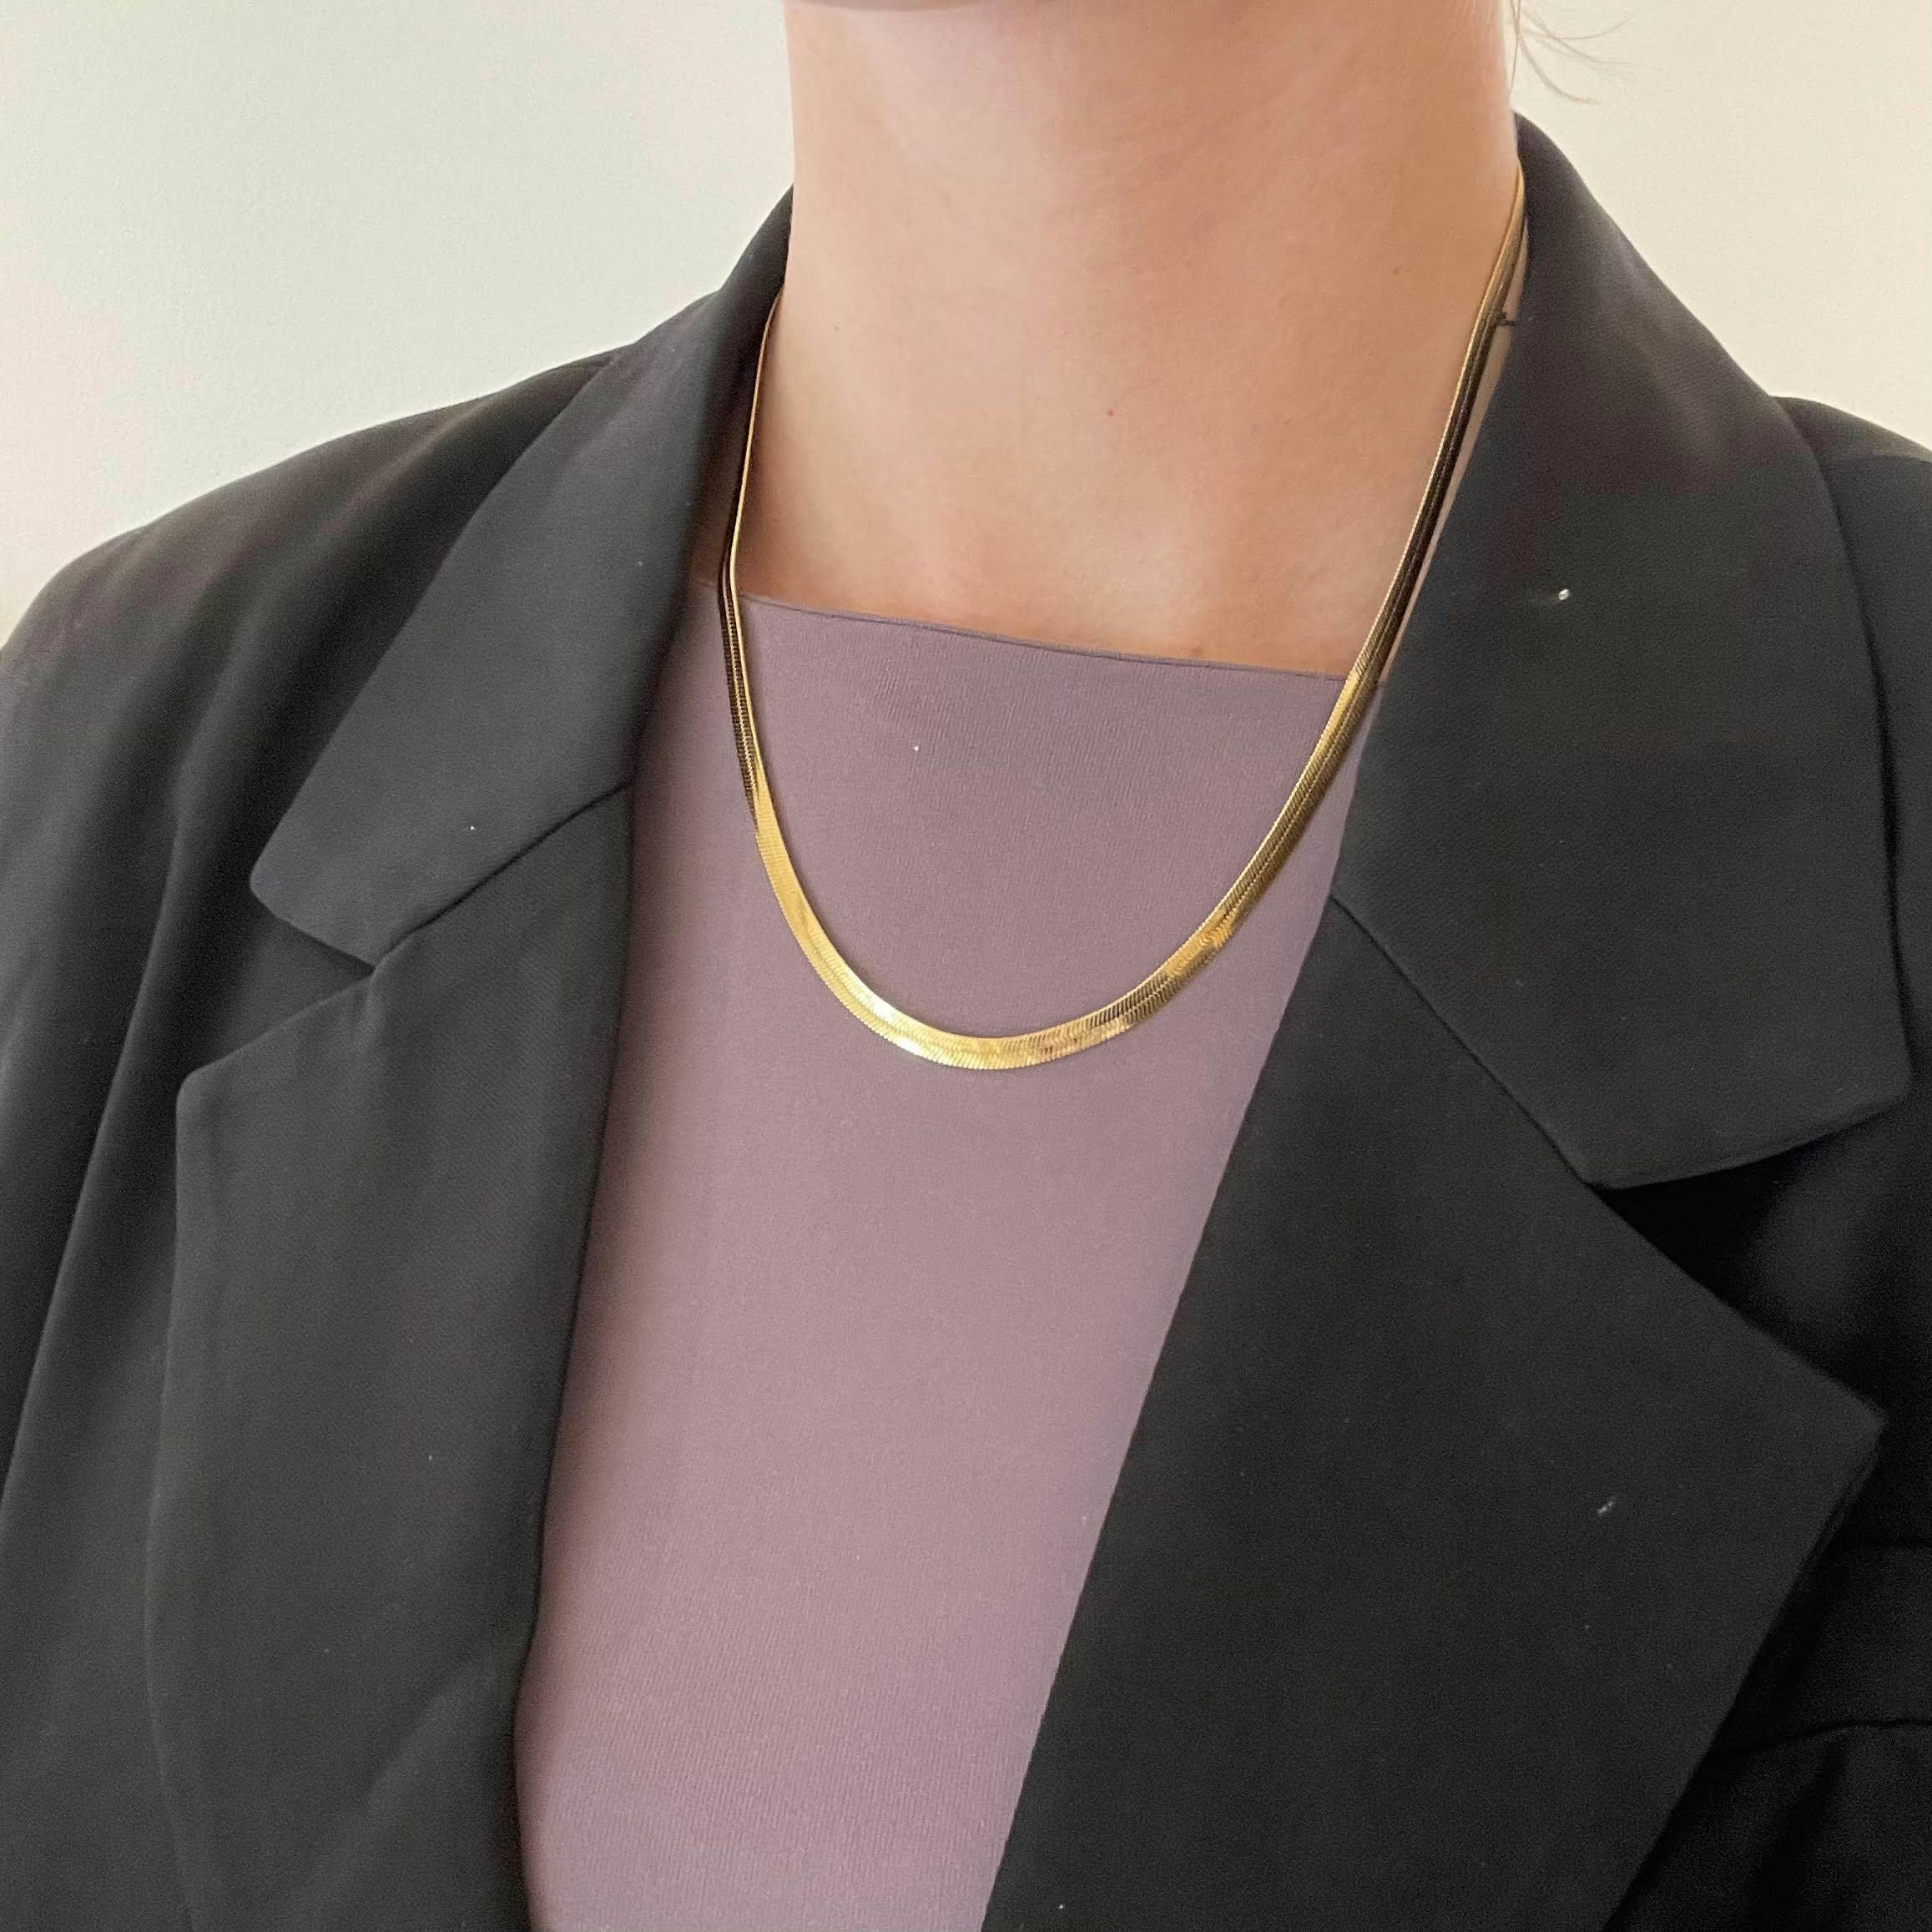 Edith necklace von Pernille Corydon in Vergoldet-Silber Sterling 925|Blank